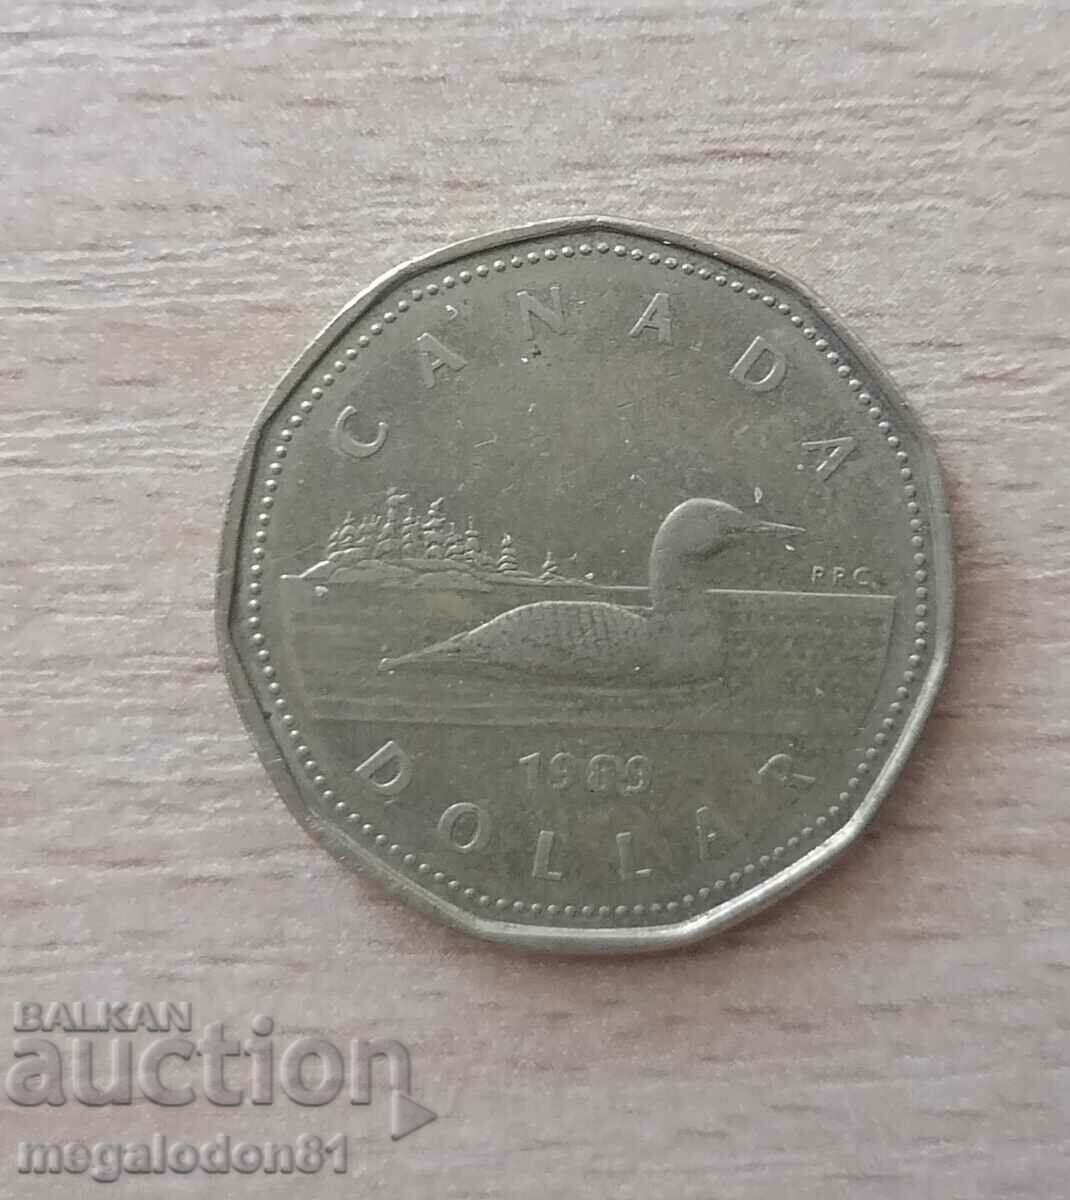 Canada - 1 dolar 1989